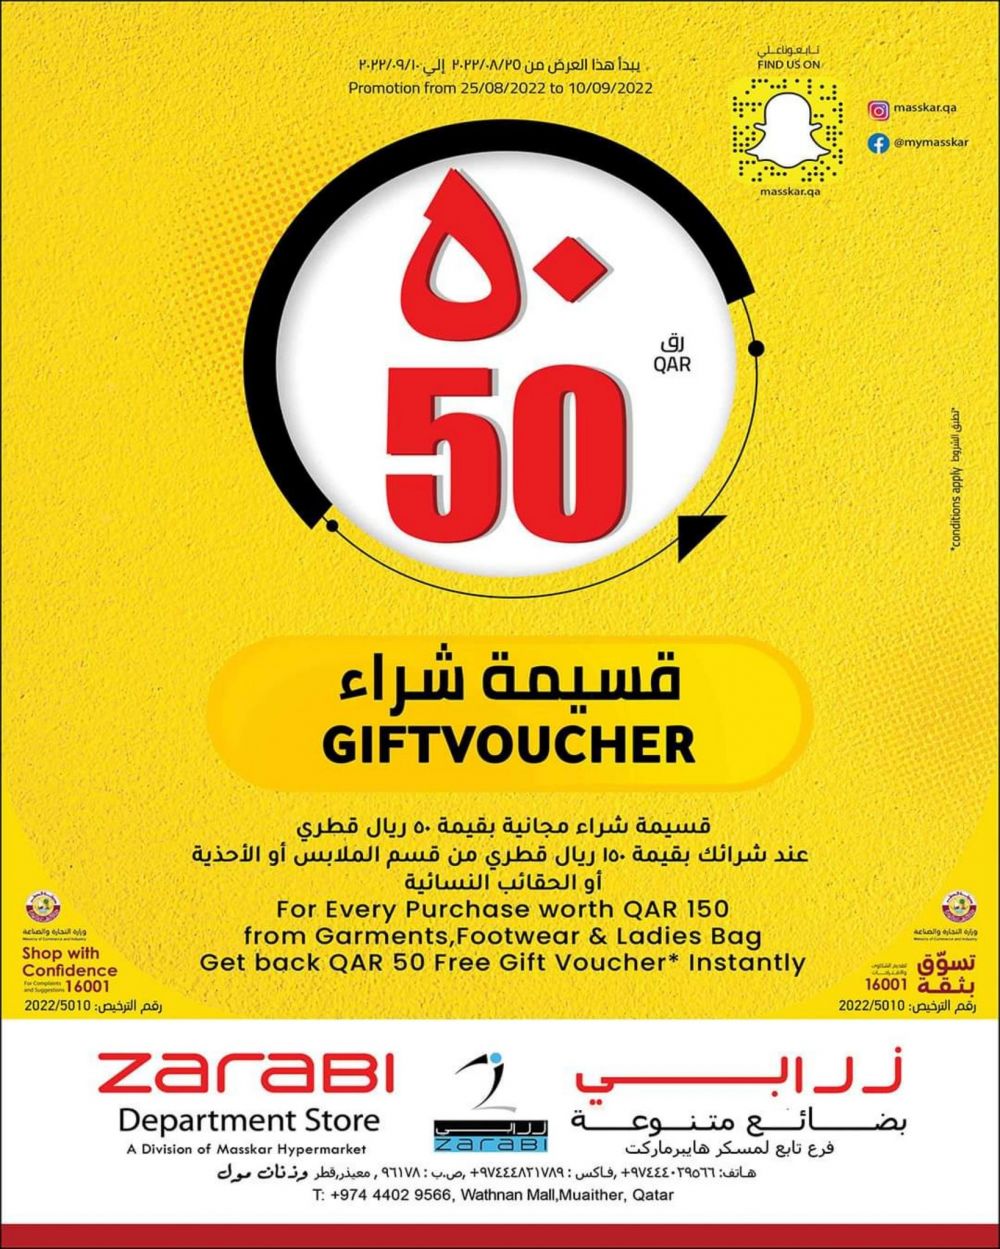 Zarabi Hypermarket Qatar offers 2022